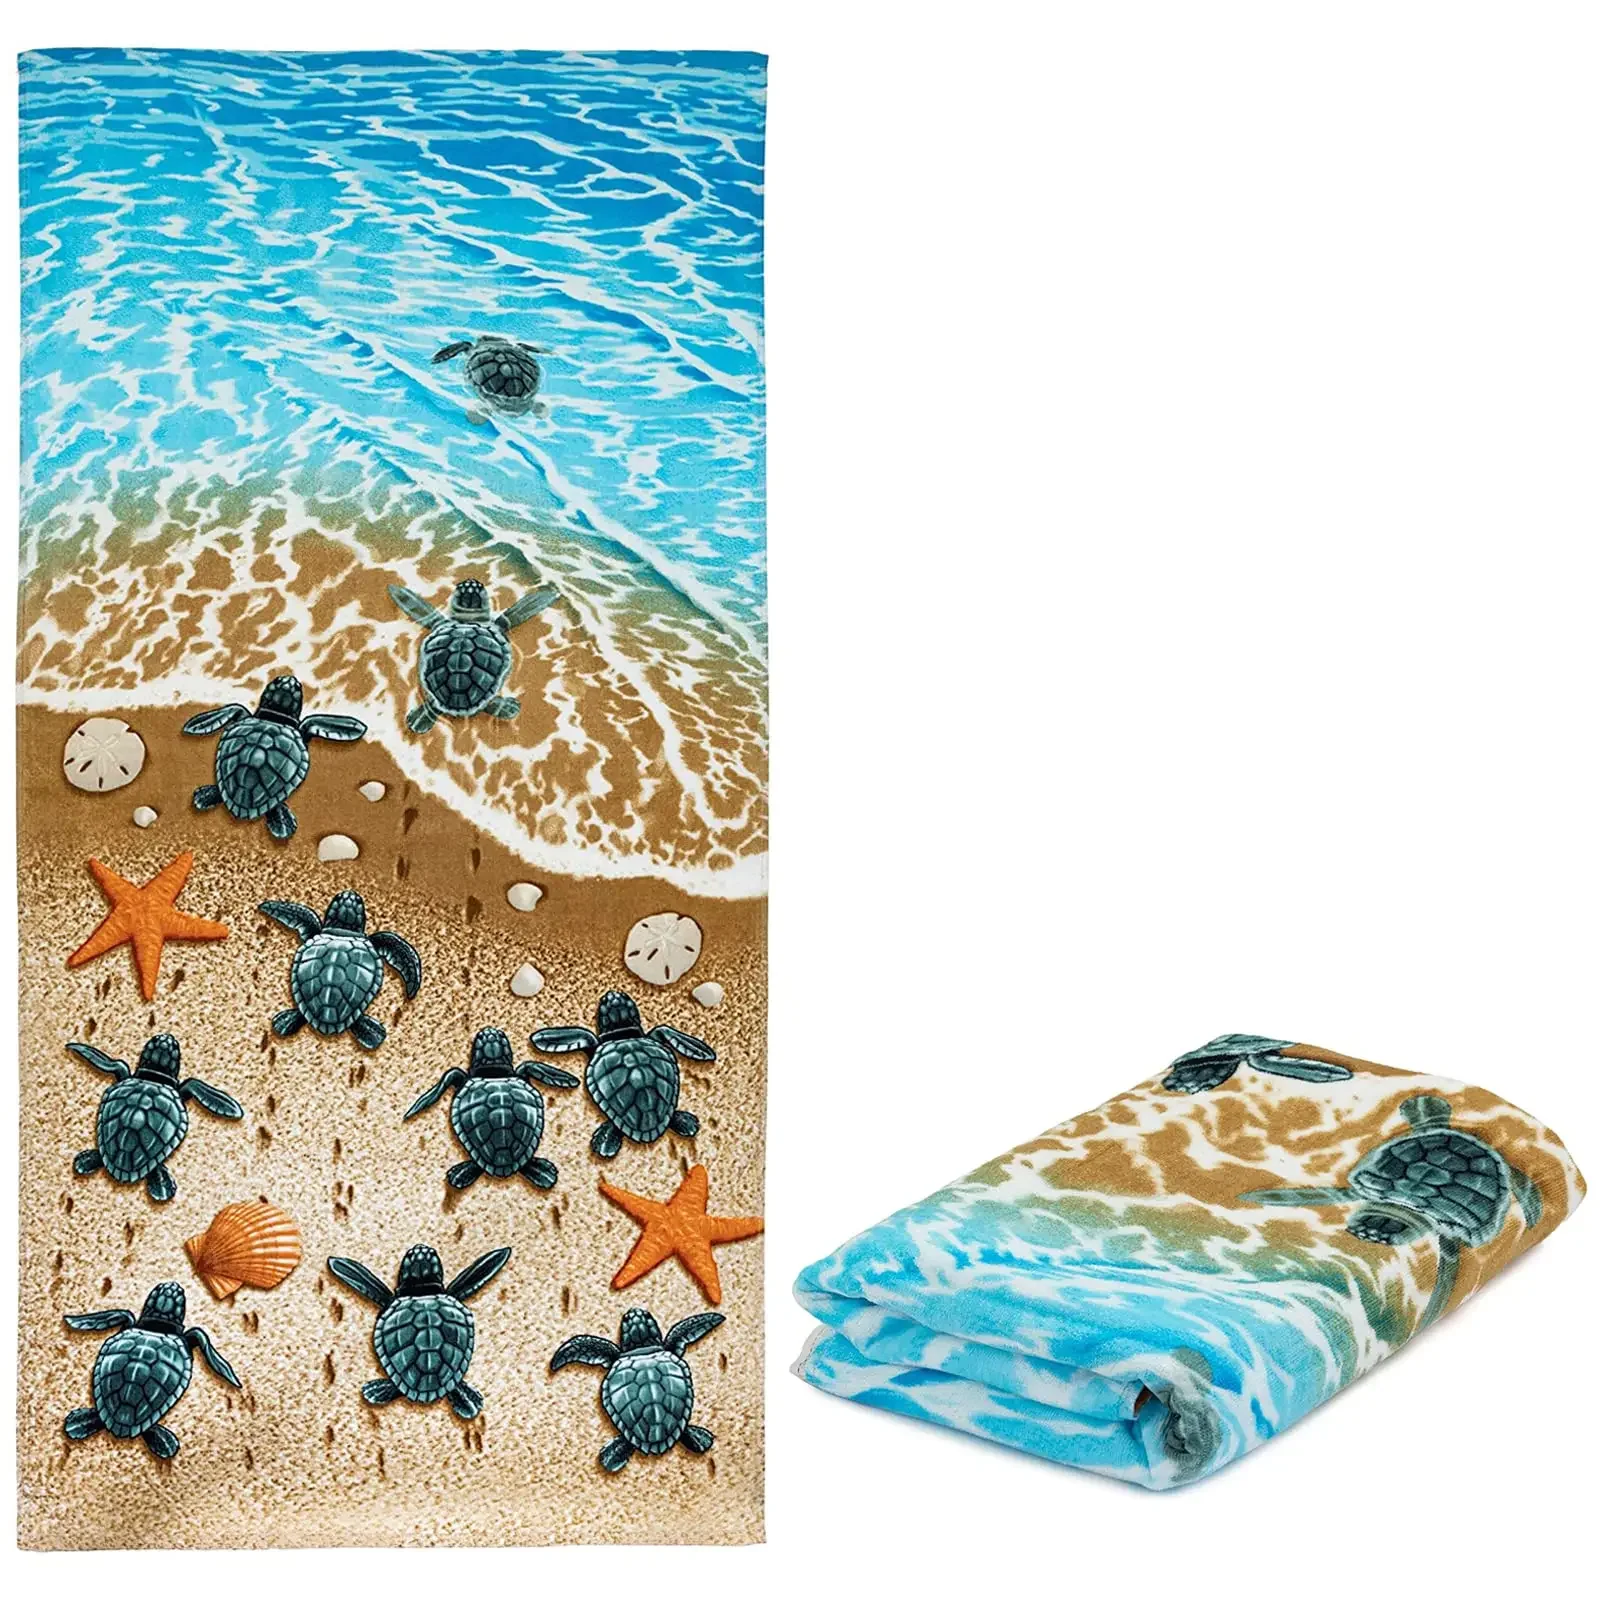 

Turtles on The Beach Super Soft Plush Beach Bath Pool Towel, Microfiber Turtle Beach Towels Ultra-Absorbent Quick Dry Sand Free